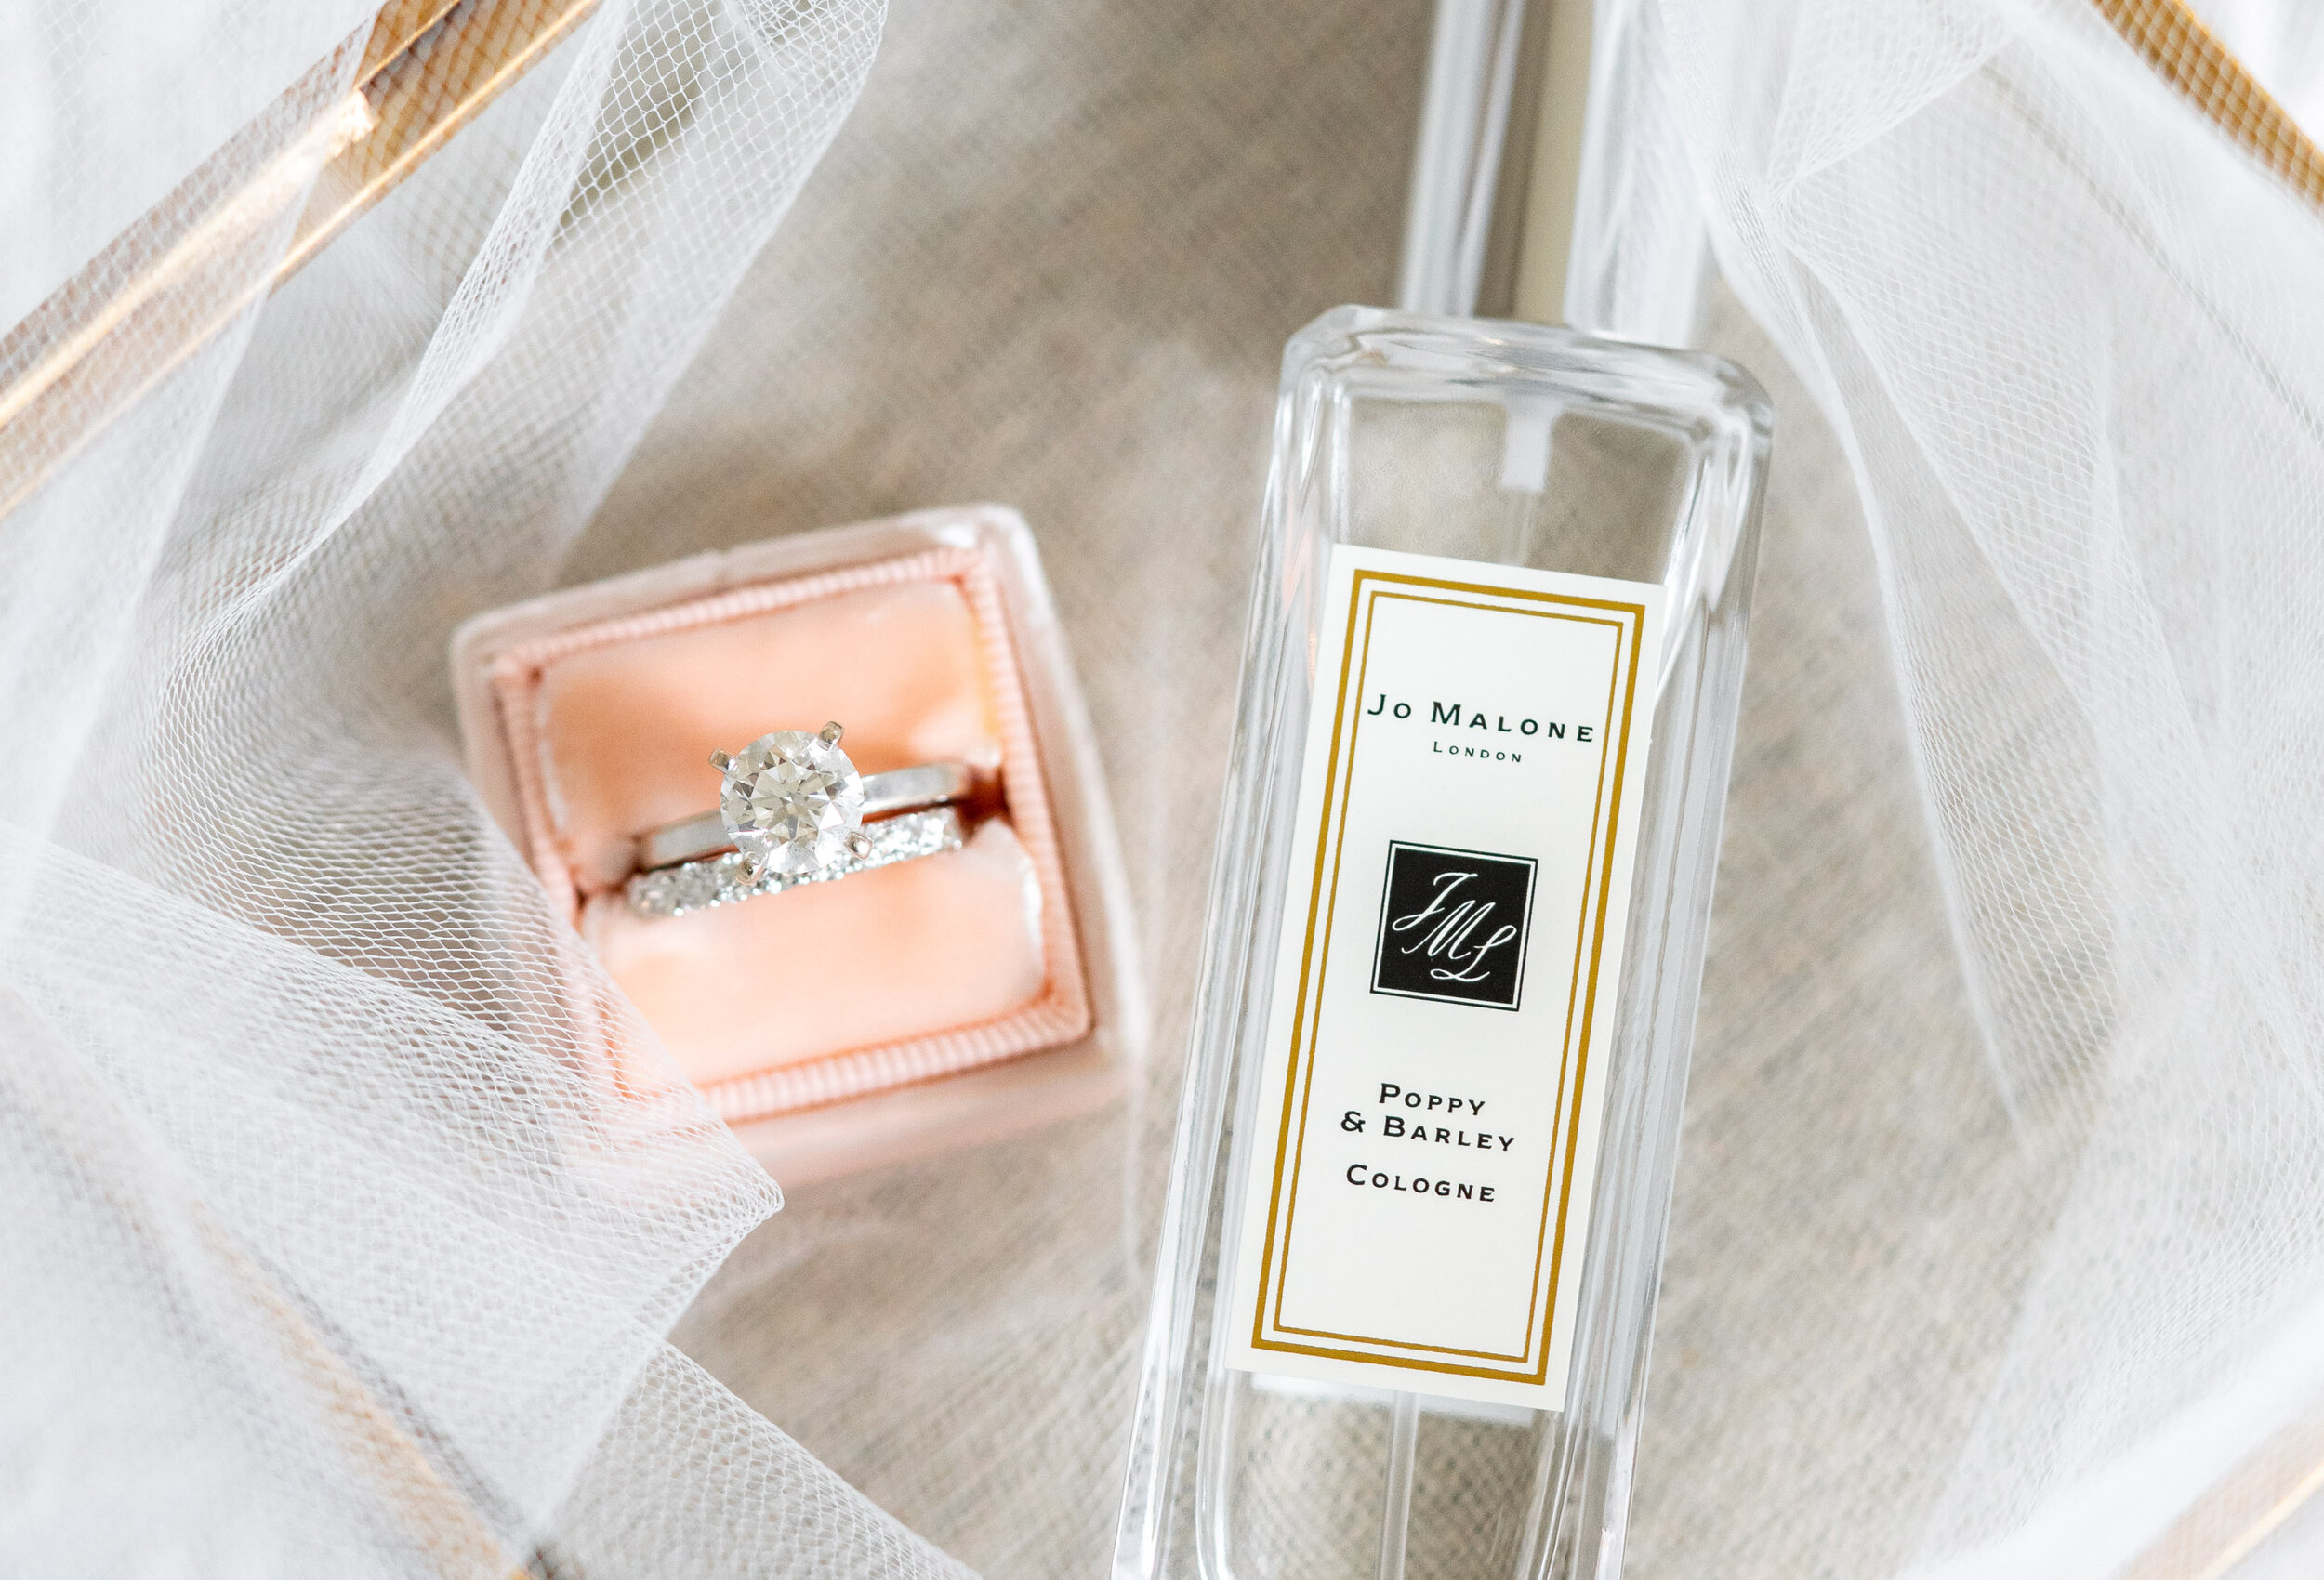 Blush pink Mrs Box and Jo Malone perfume on wedding day details